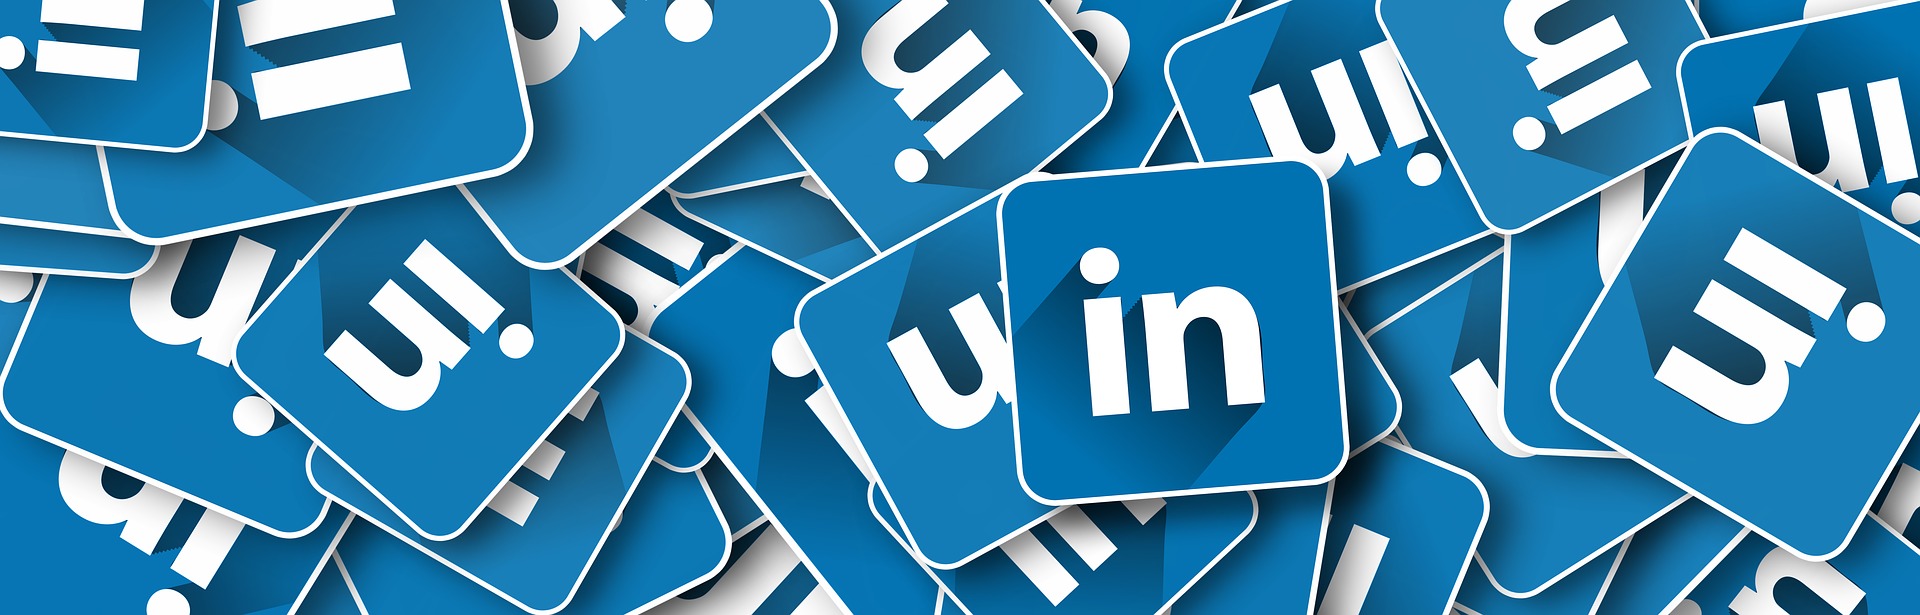 12 ways to improve your LinkedIn profile